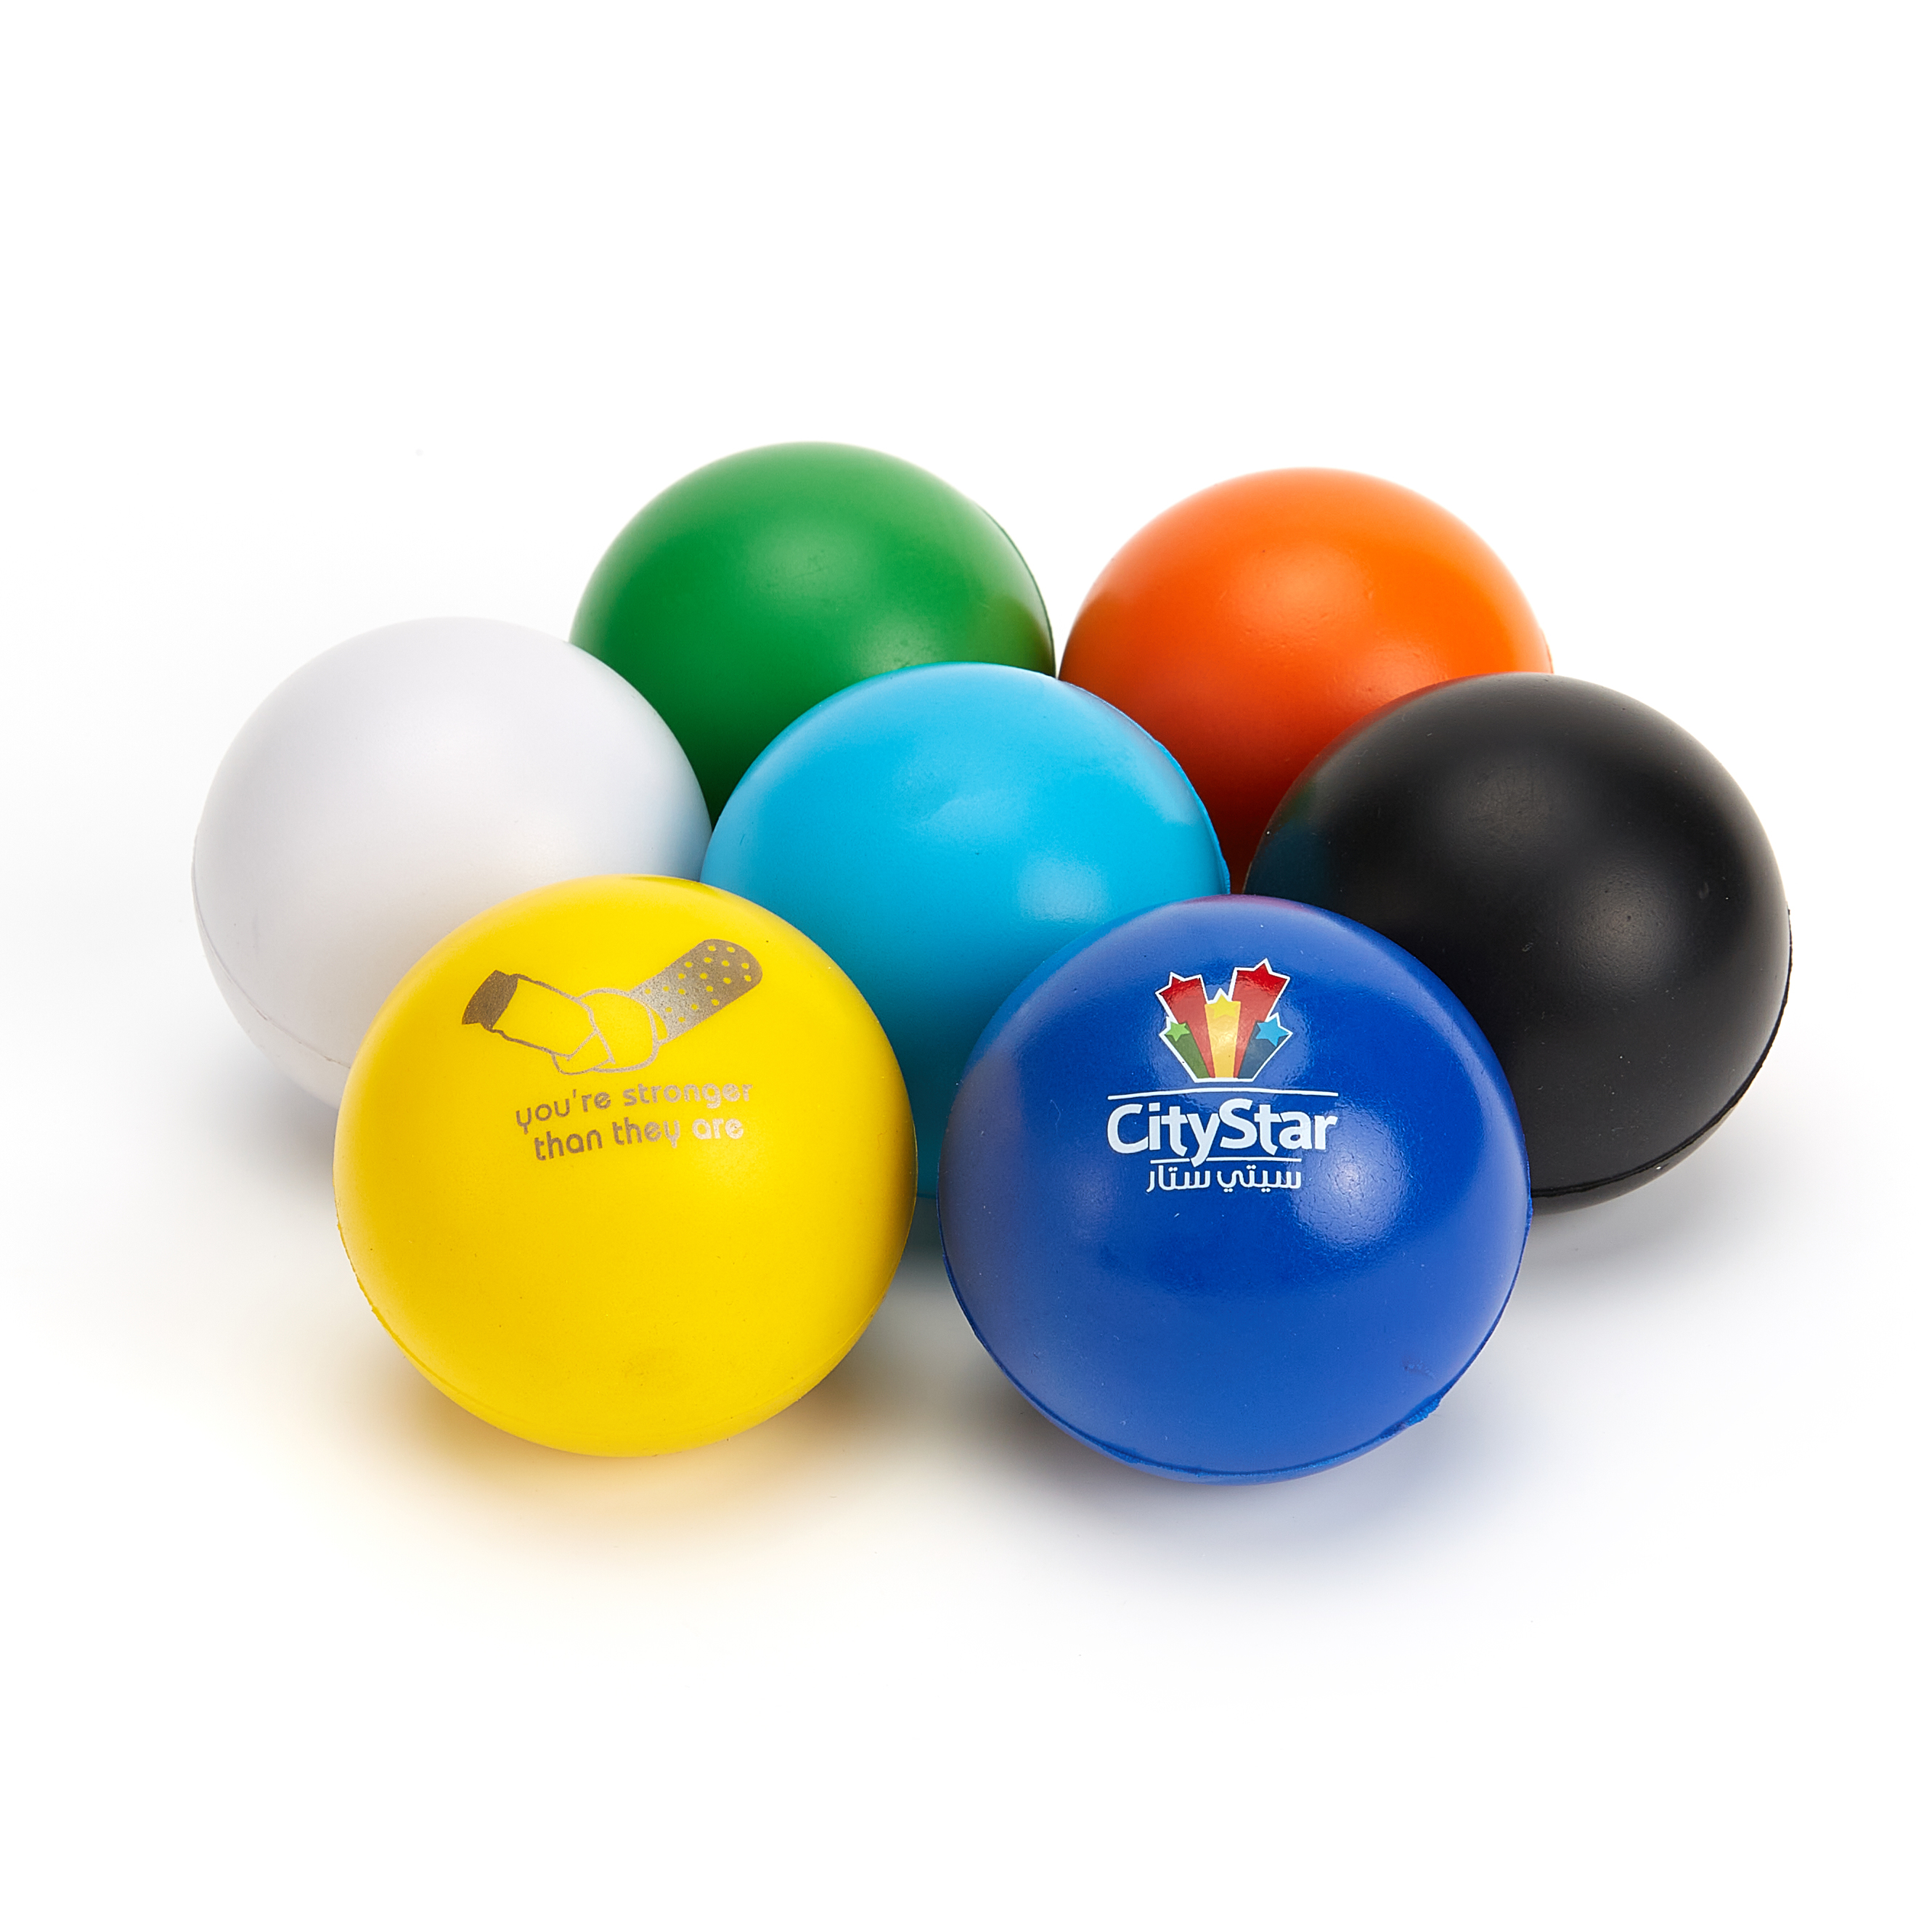 Round stress ball